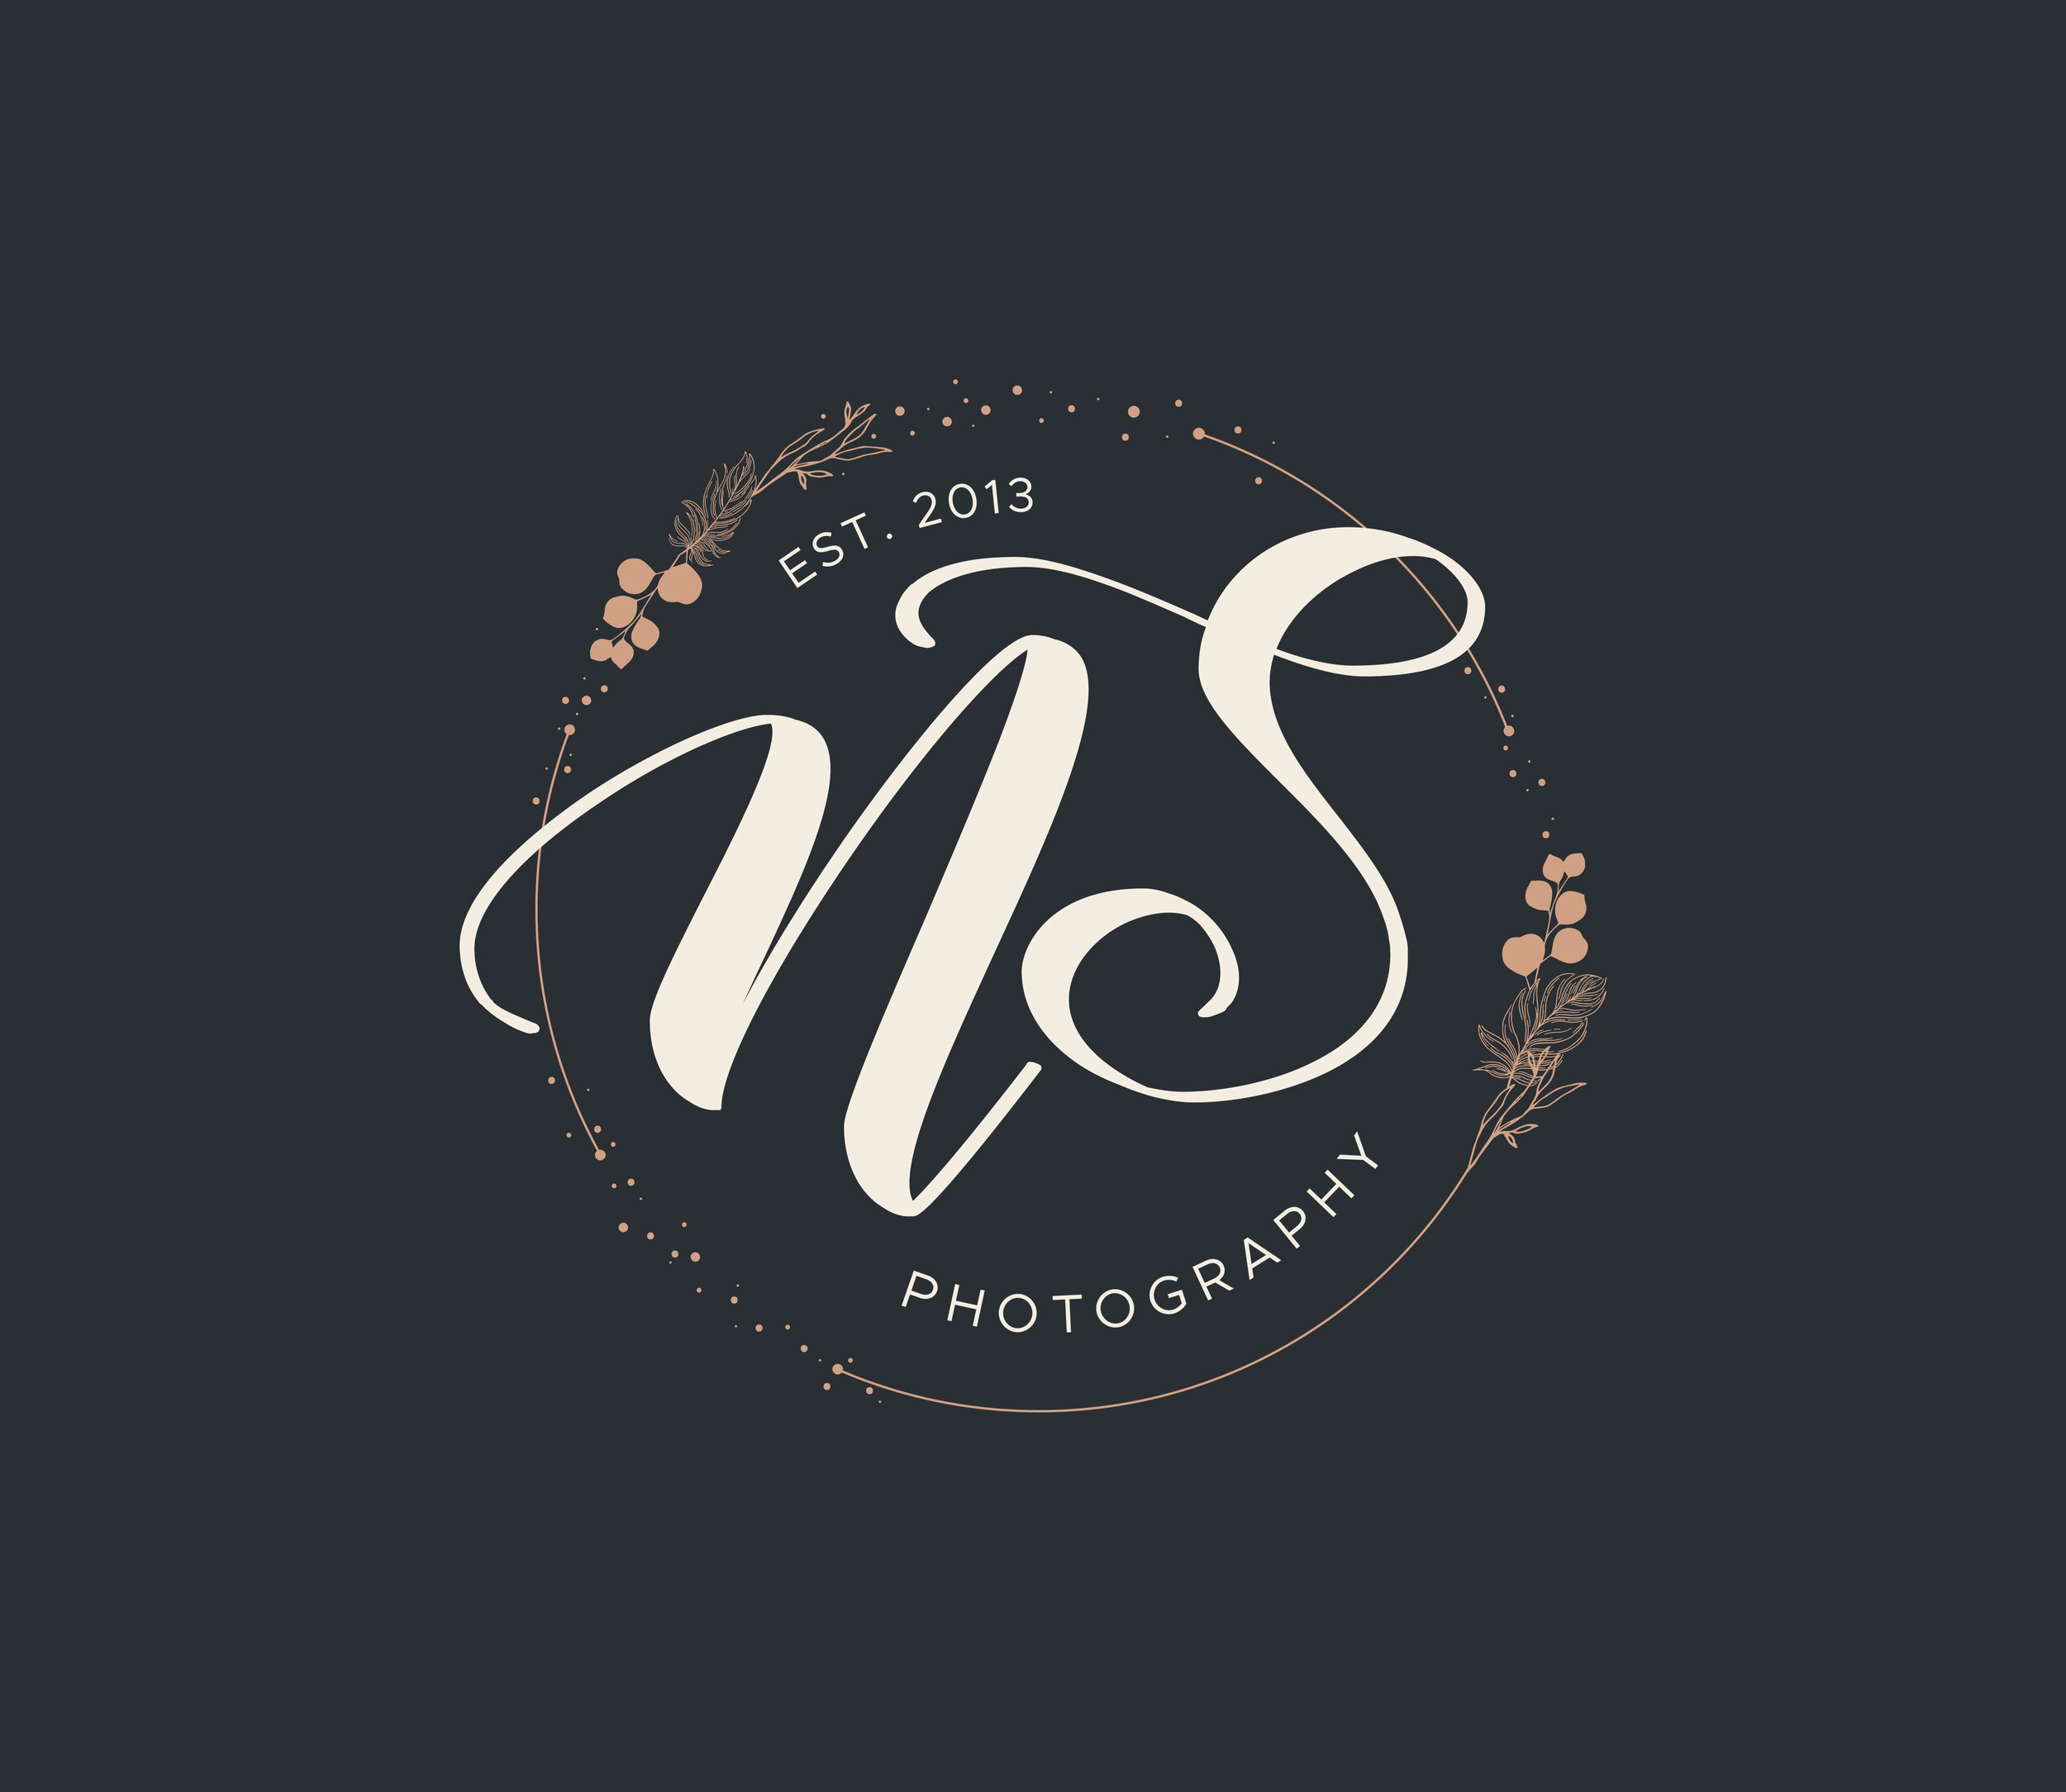 Dallas Fort Worth Photography Studio Logo Design - Visual Lure